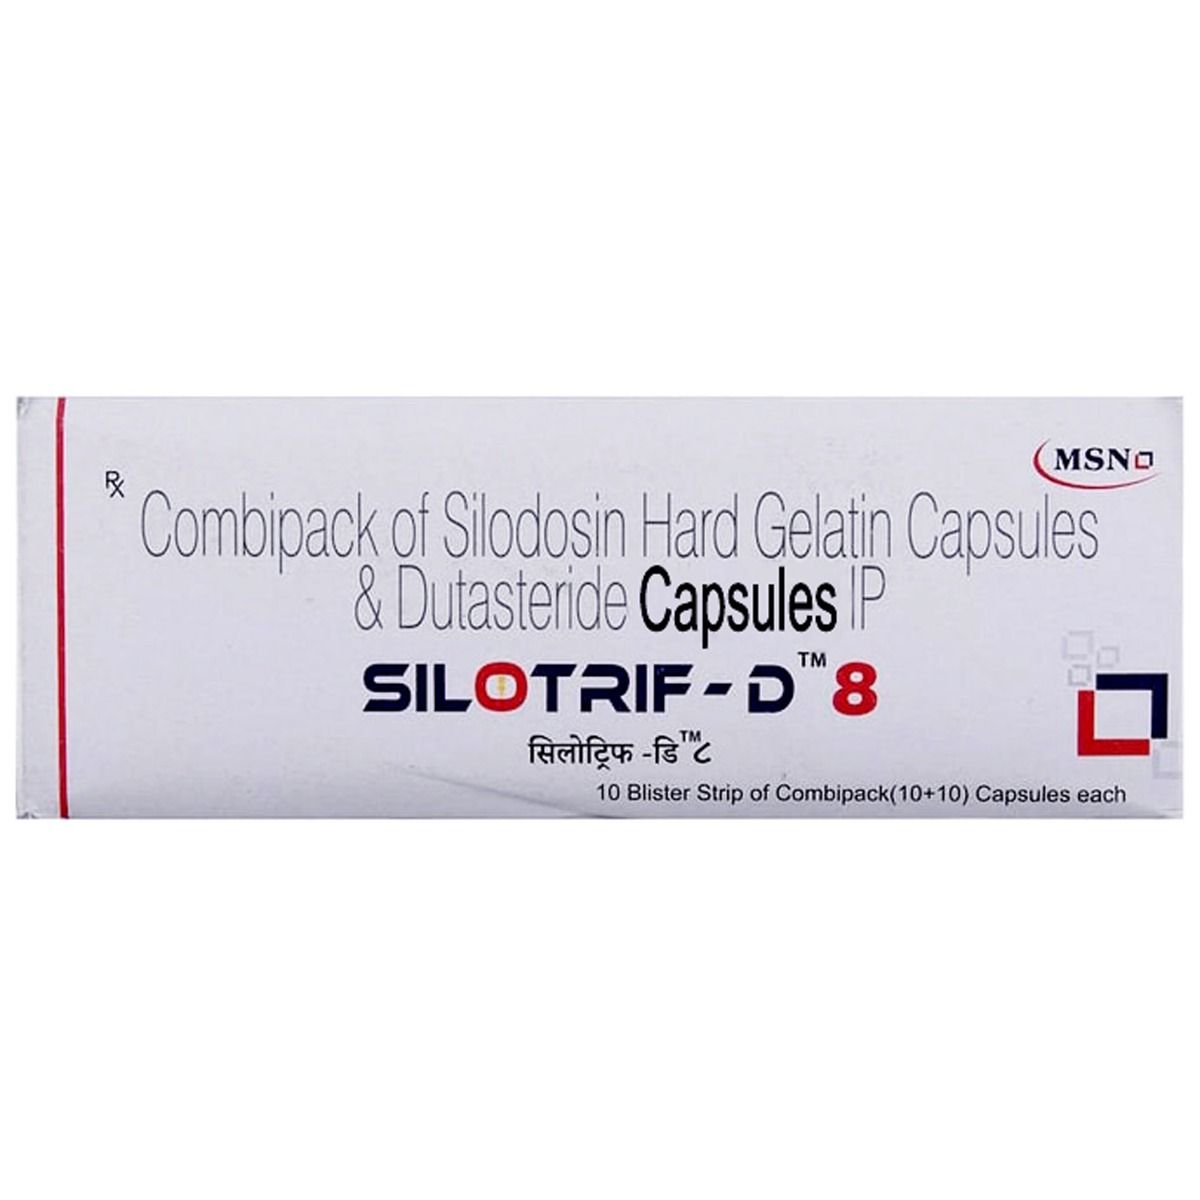 Silotrif-D 8 Capsule Combipack 1's, Pack of 1 COMBIPACK